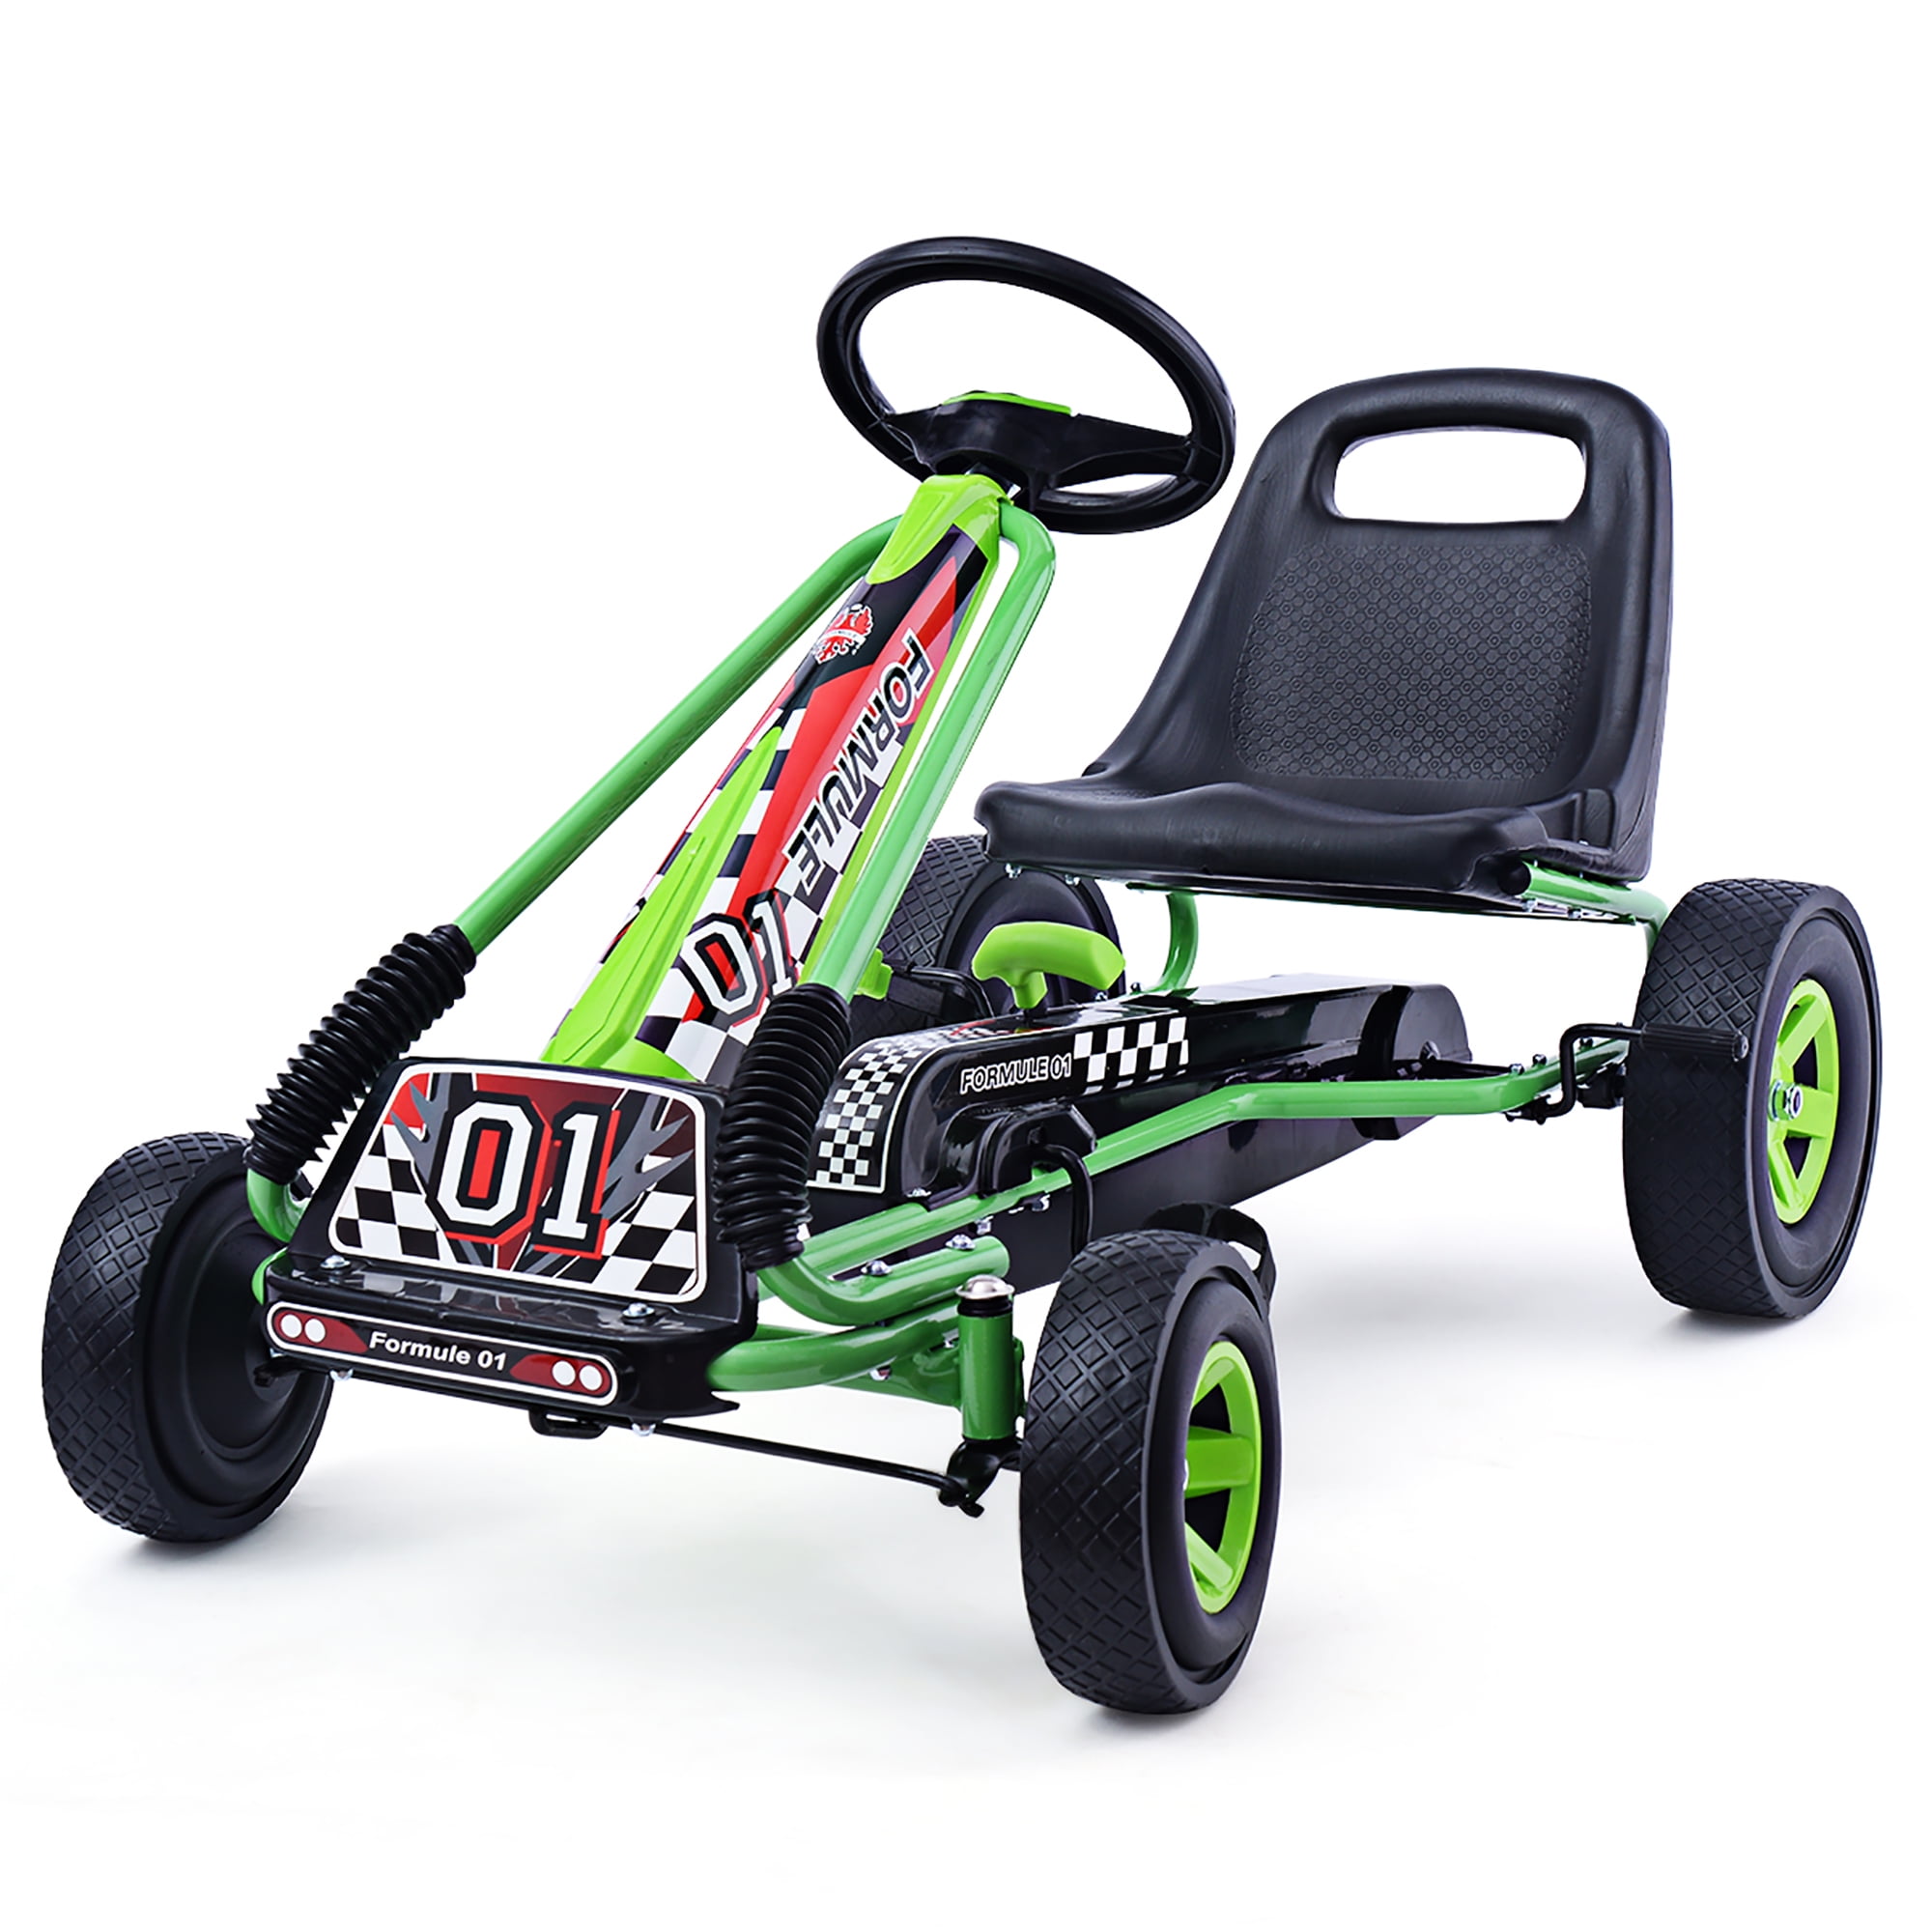 Kids Black Quad Pedal Go Kart 4 Wheel Powered Outdoor Sports Racing Toys Hobbies 